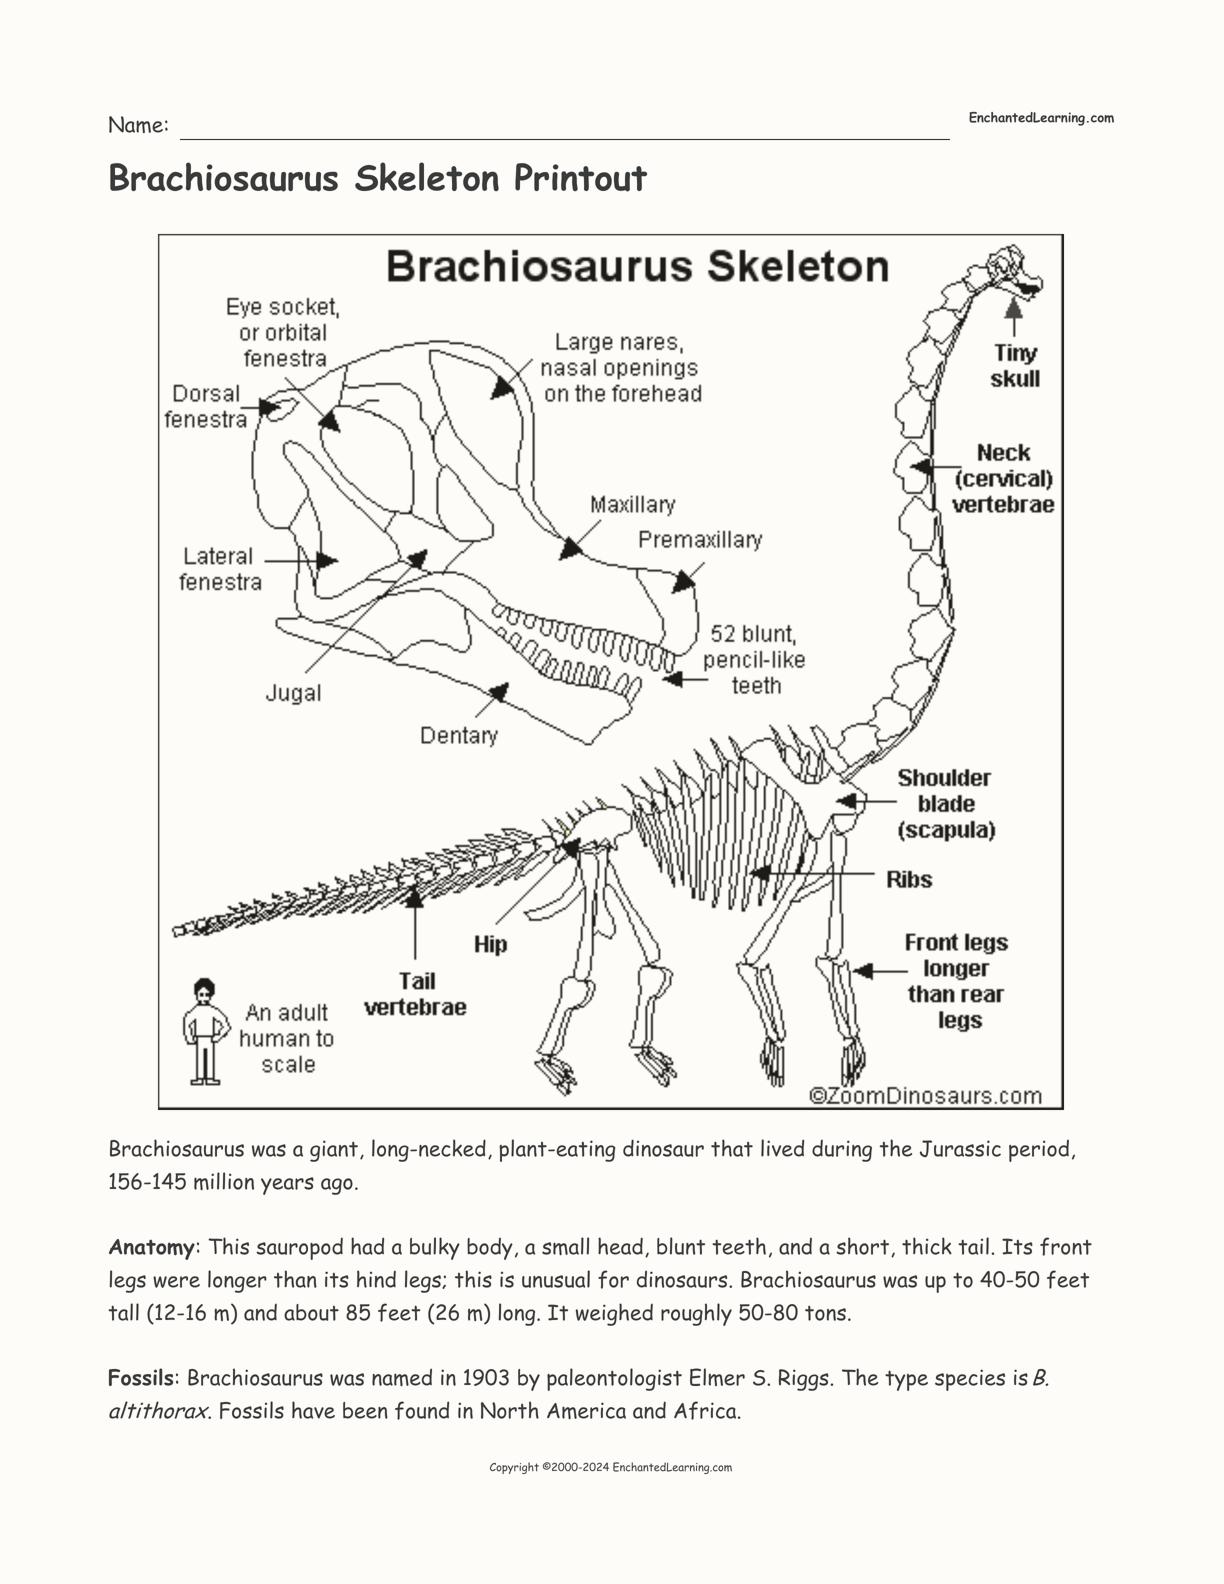 Brachiosaurus Skeleton Printout interactive worksheet page 1